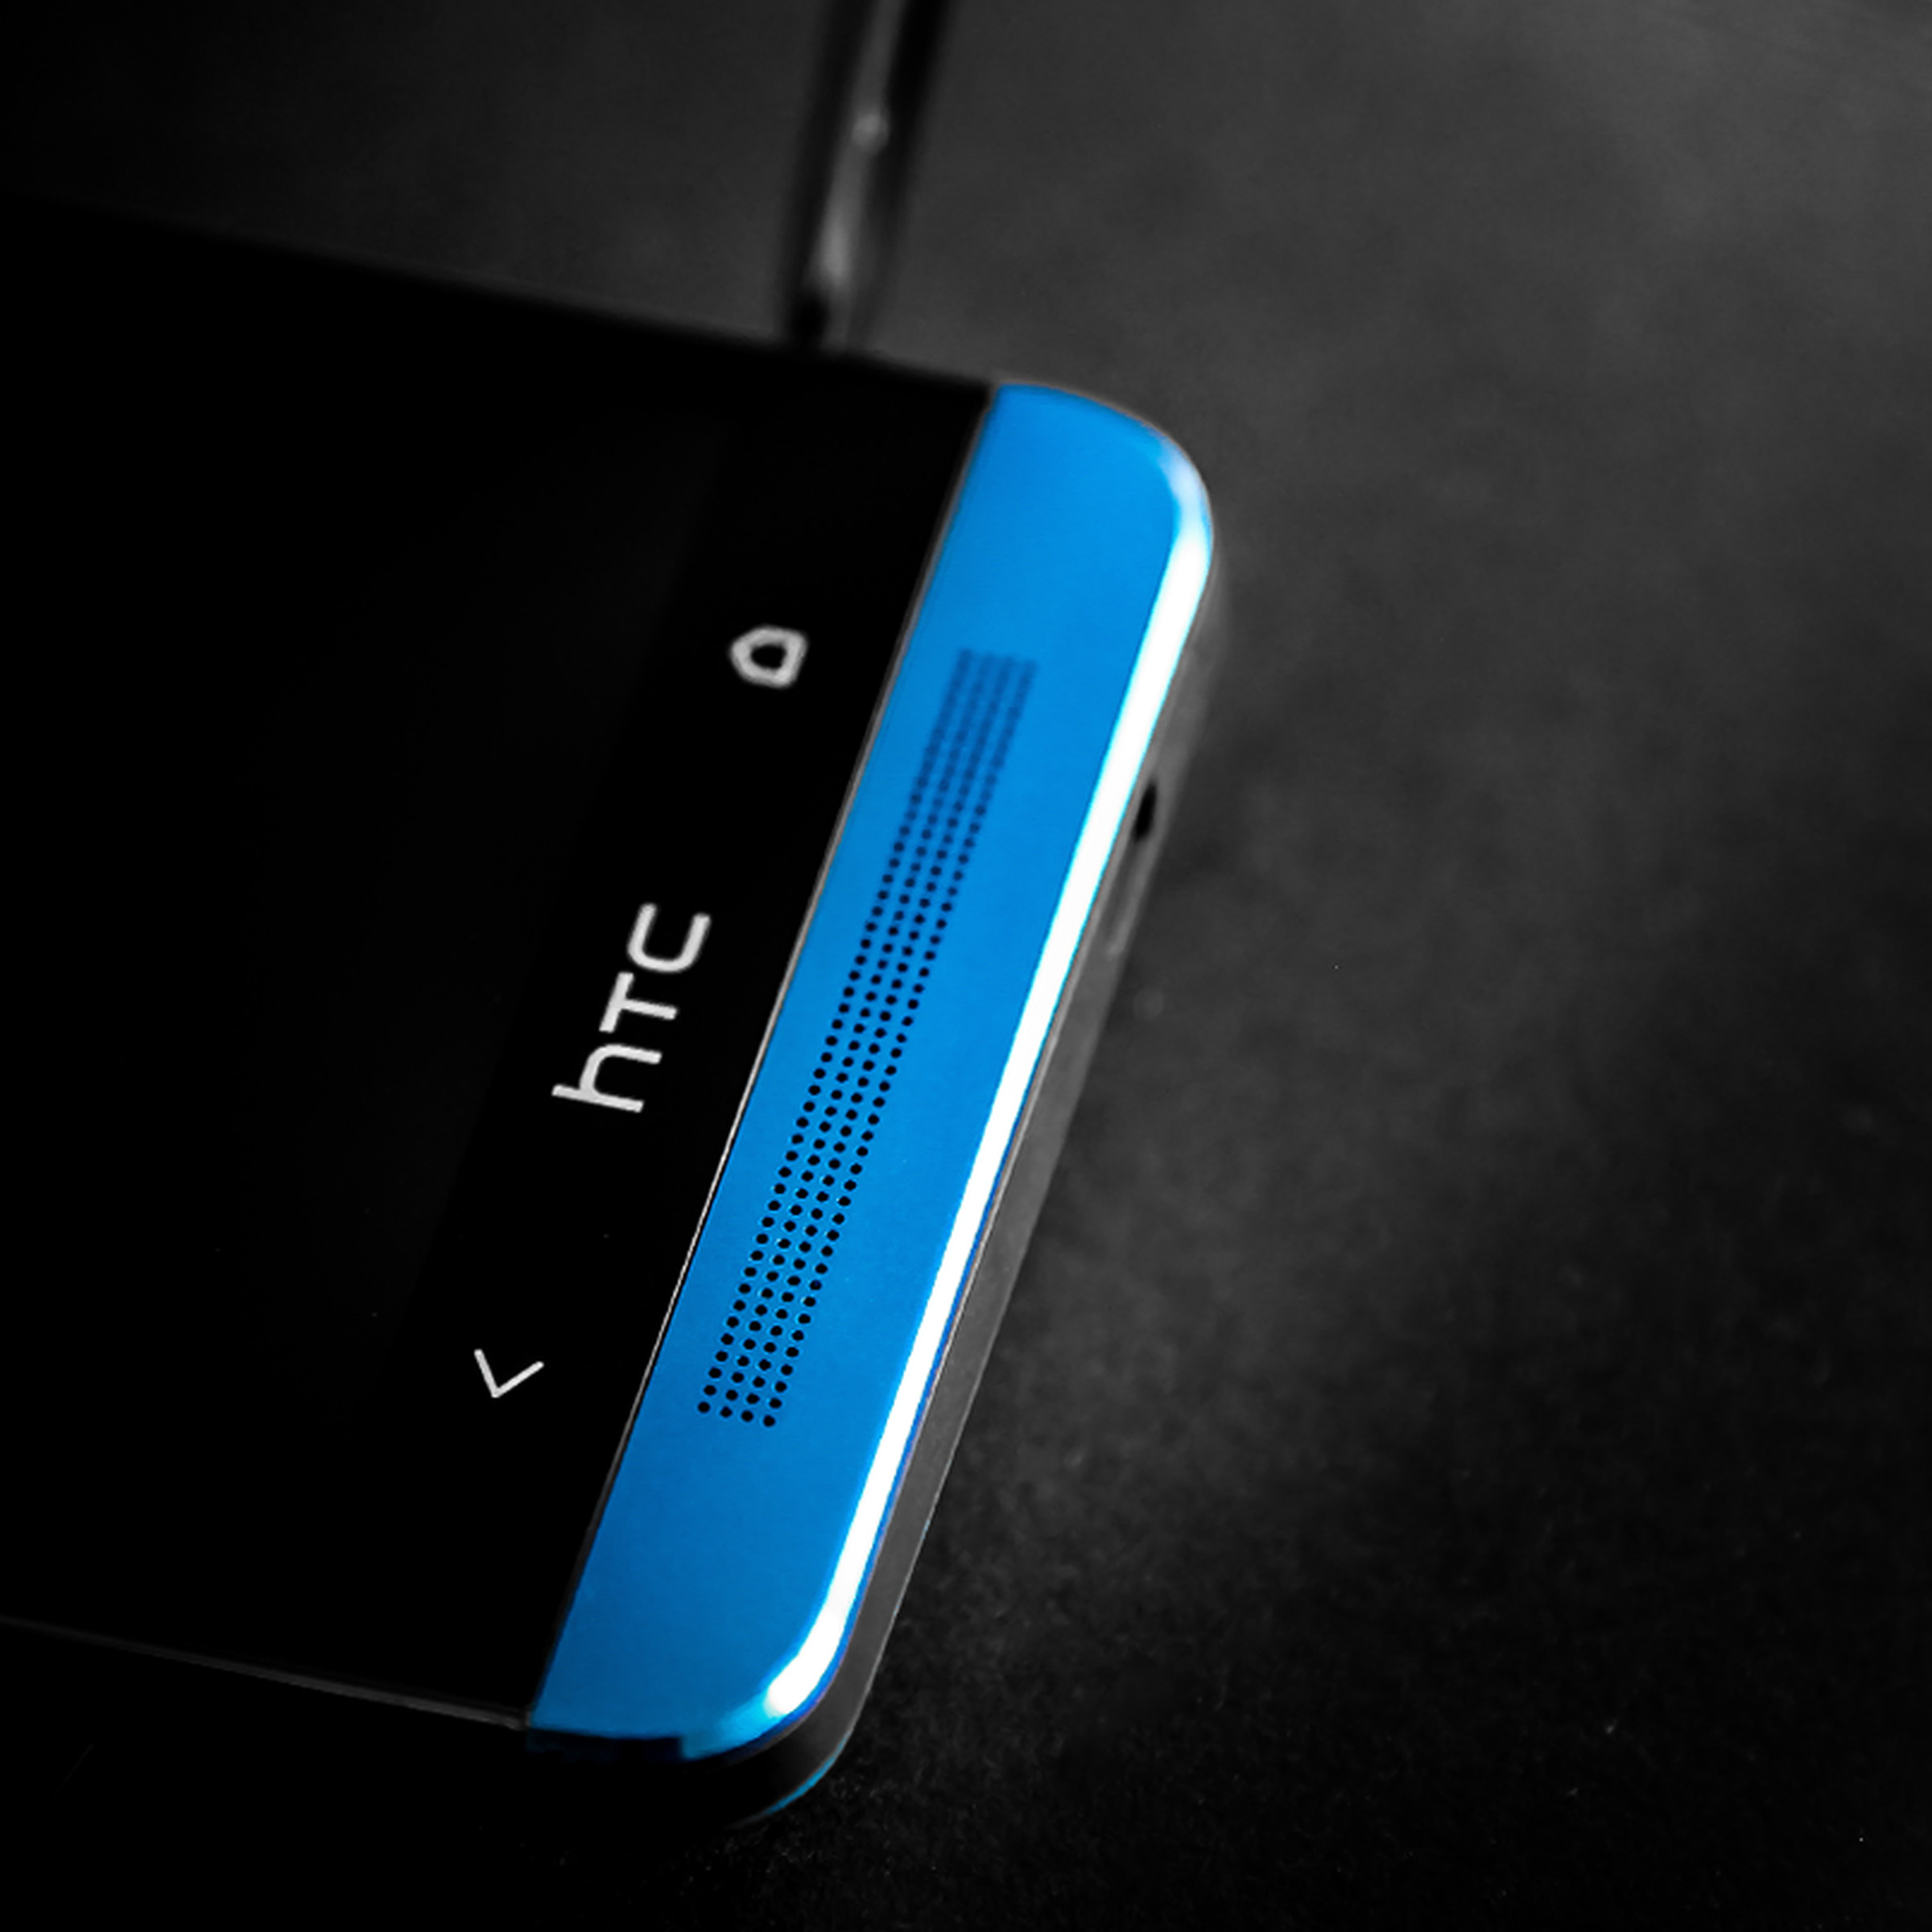 HTC One Metallic Blue photos